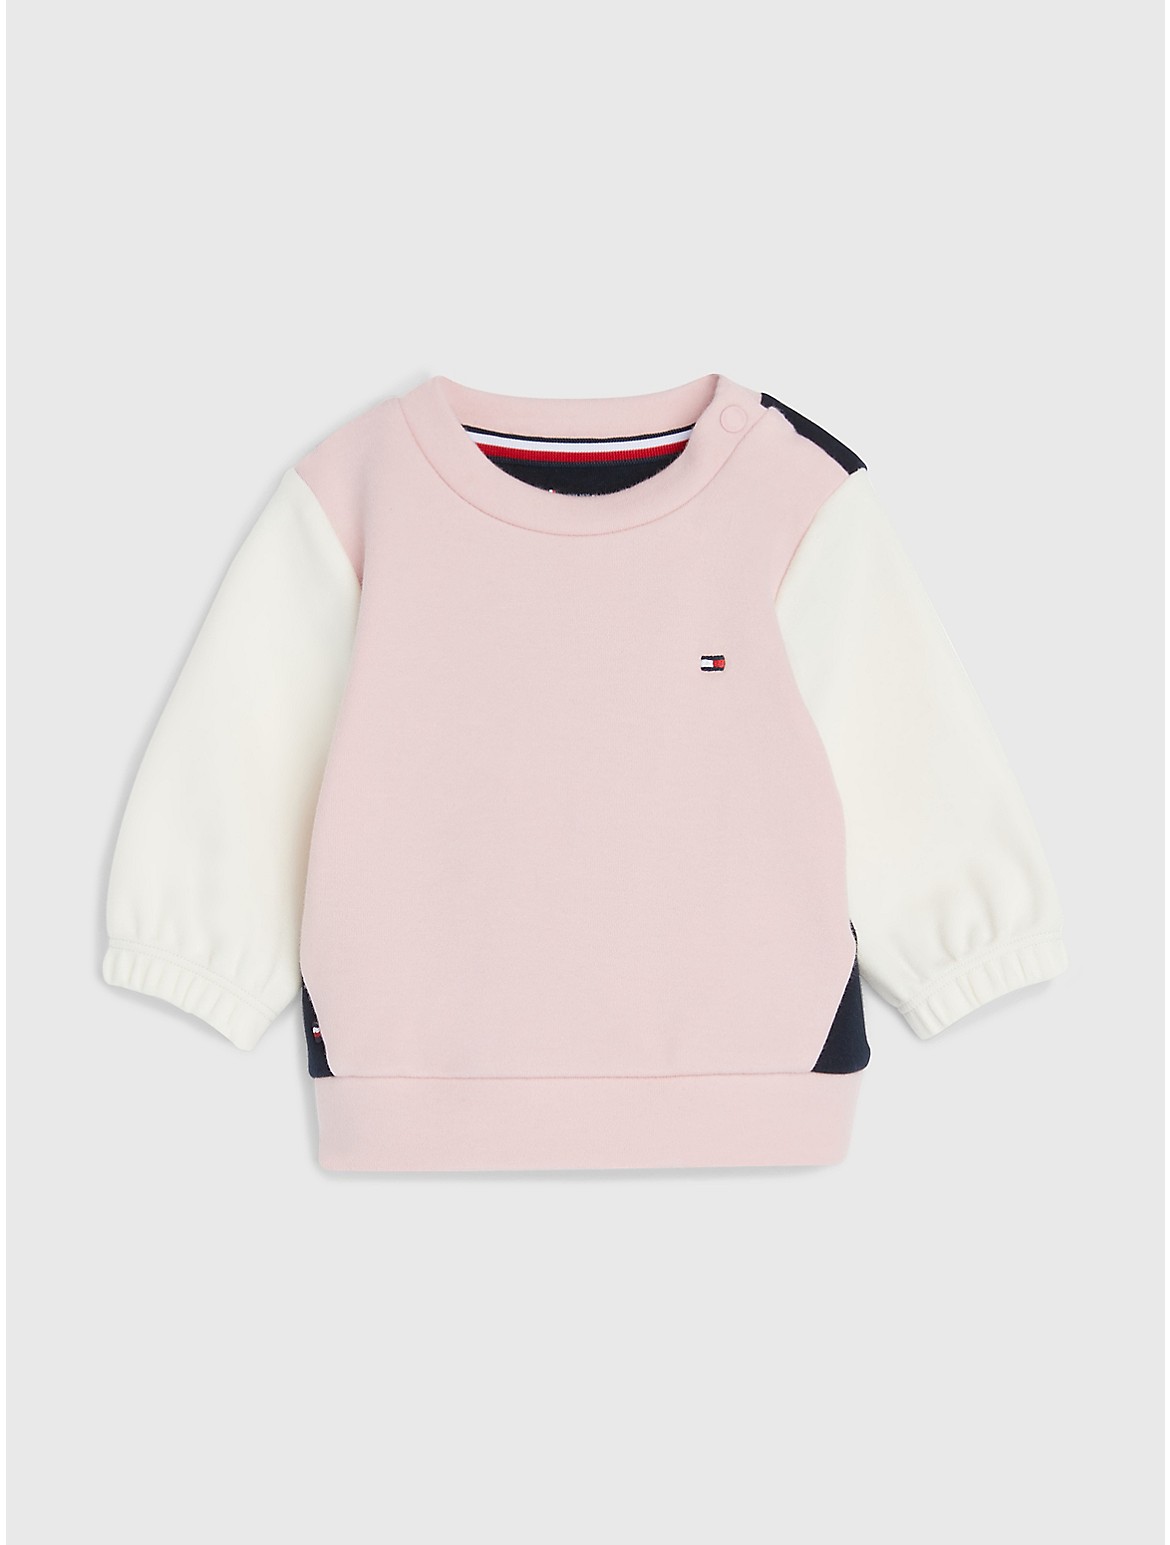 Tommy Hilfiger Babies' Colorblock Shirt & Pant Set - Pink - NEWBORN